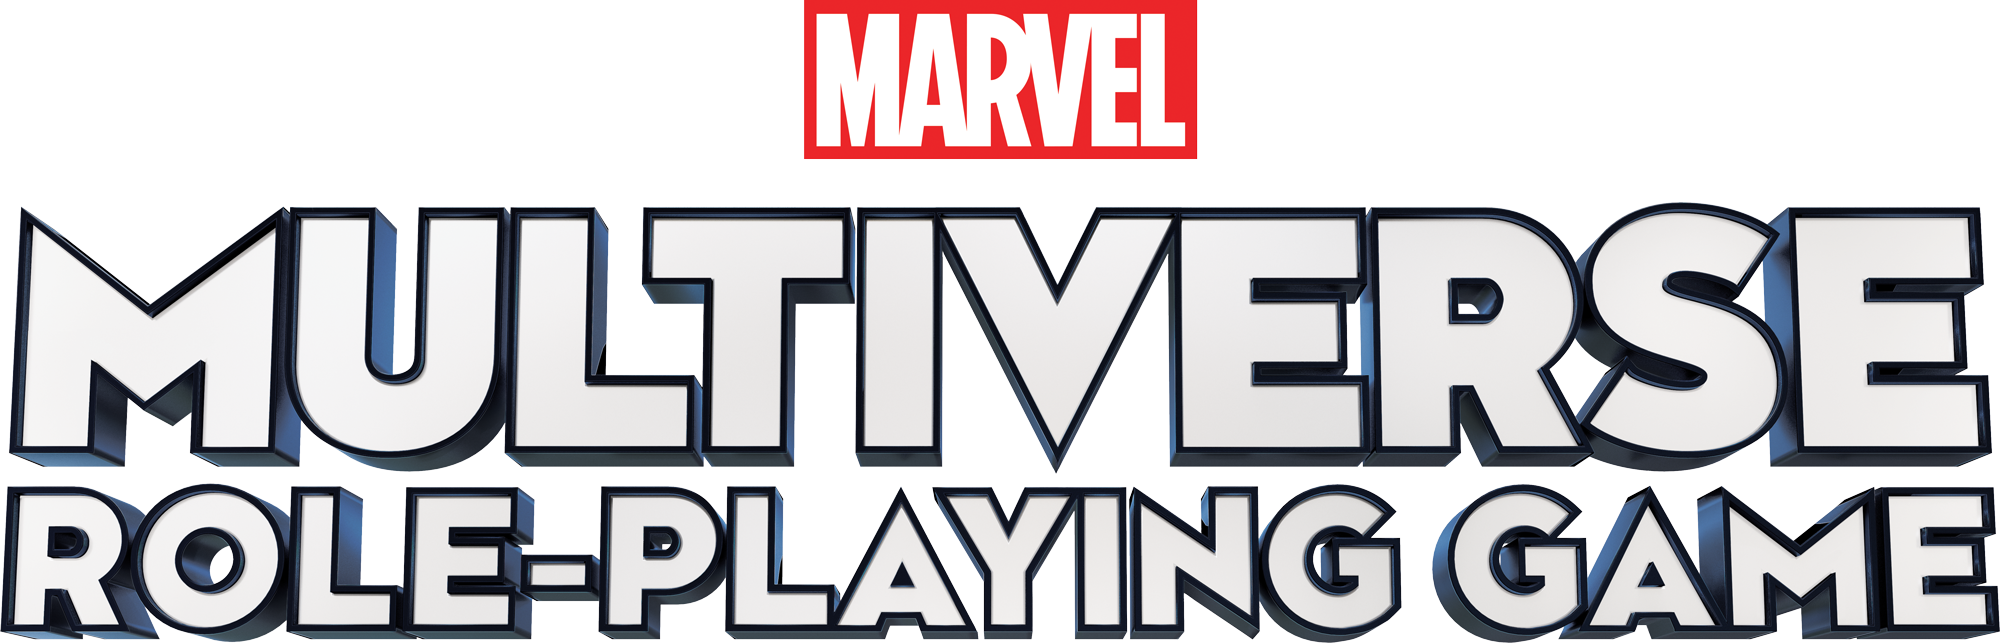 Play Marvel Multiverse on Roll20